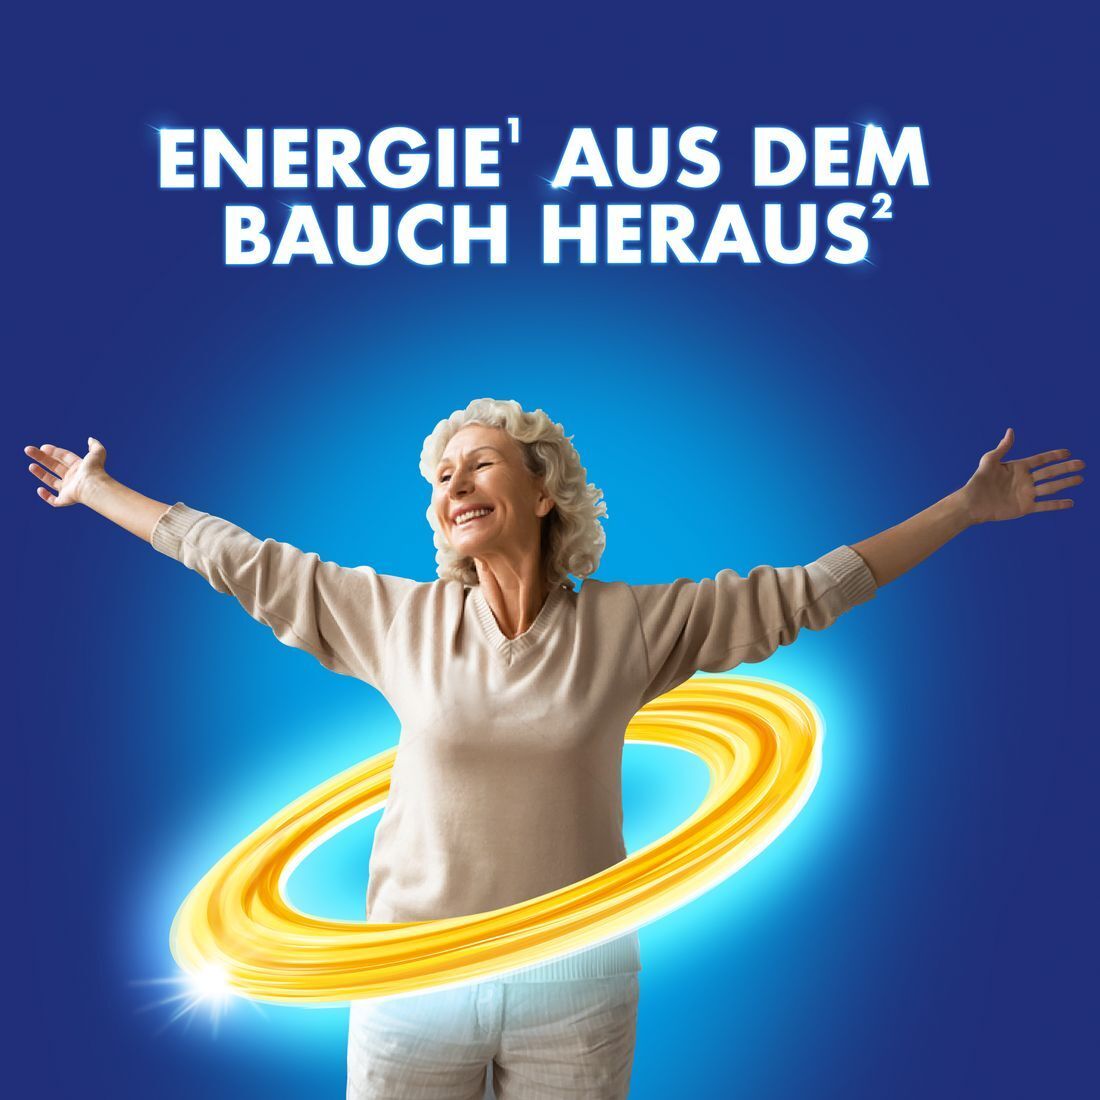 Bion® 3 50+ Energy